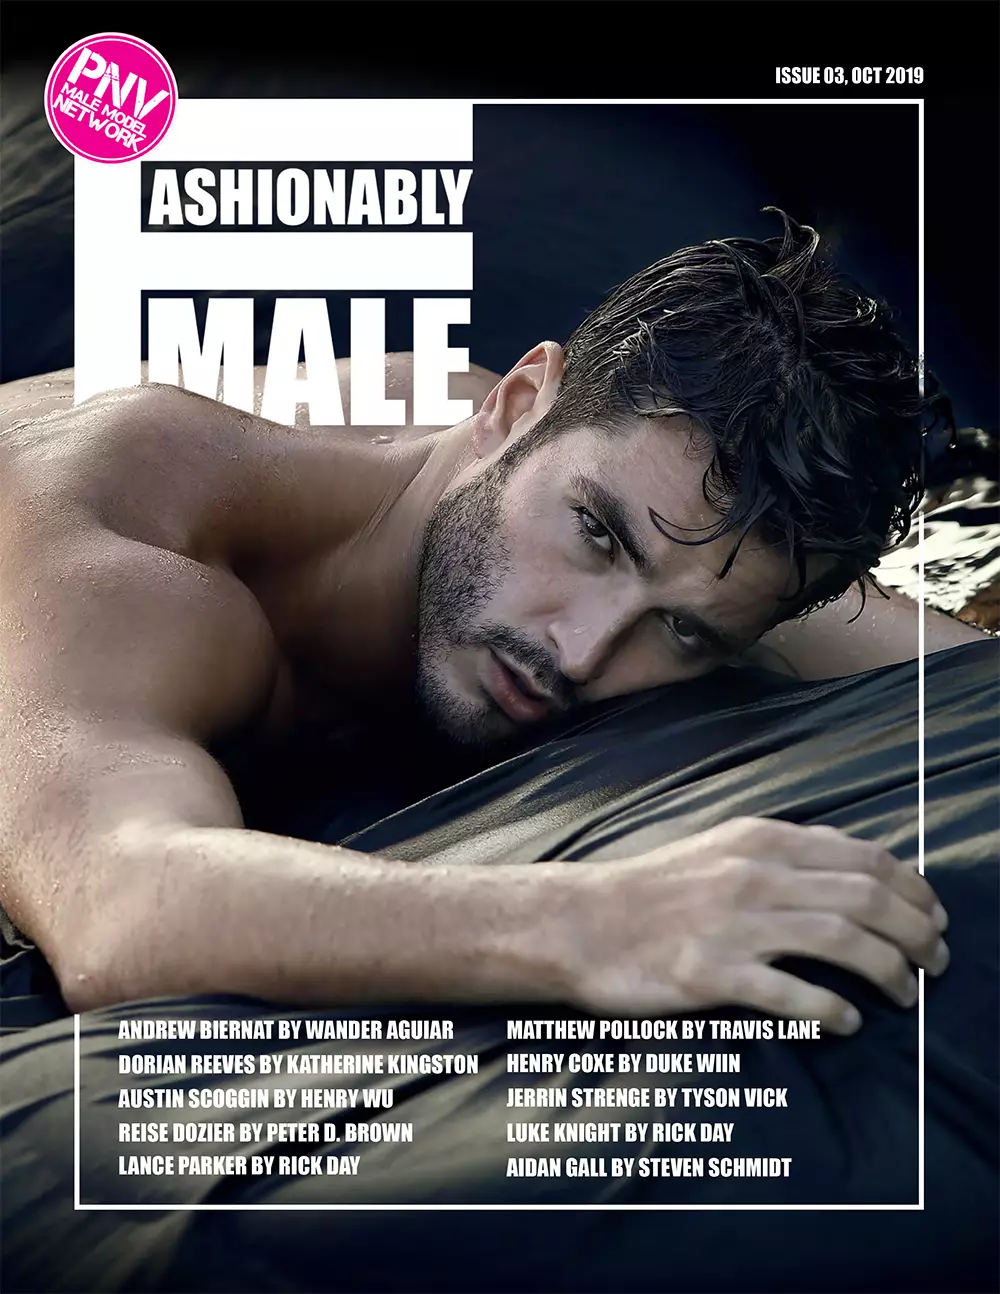 Andrew Biernat פון Wander Aguiar פֿאַר PnVFashionably male Magazine Issue 03